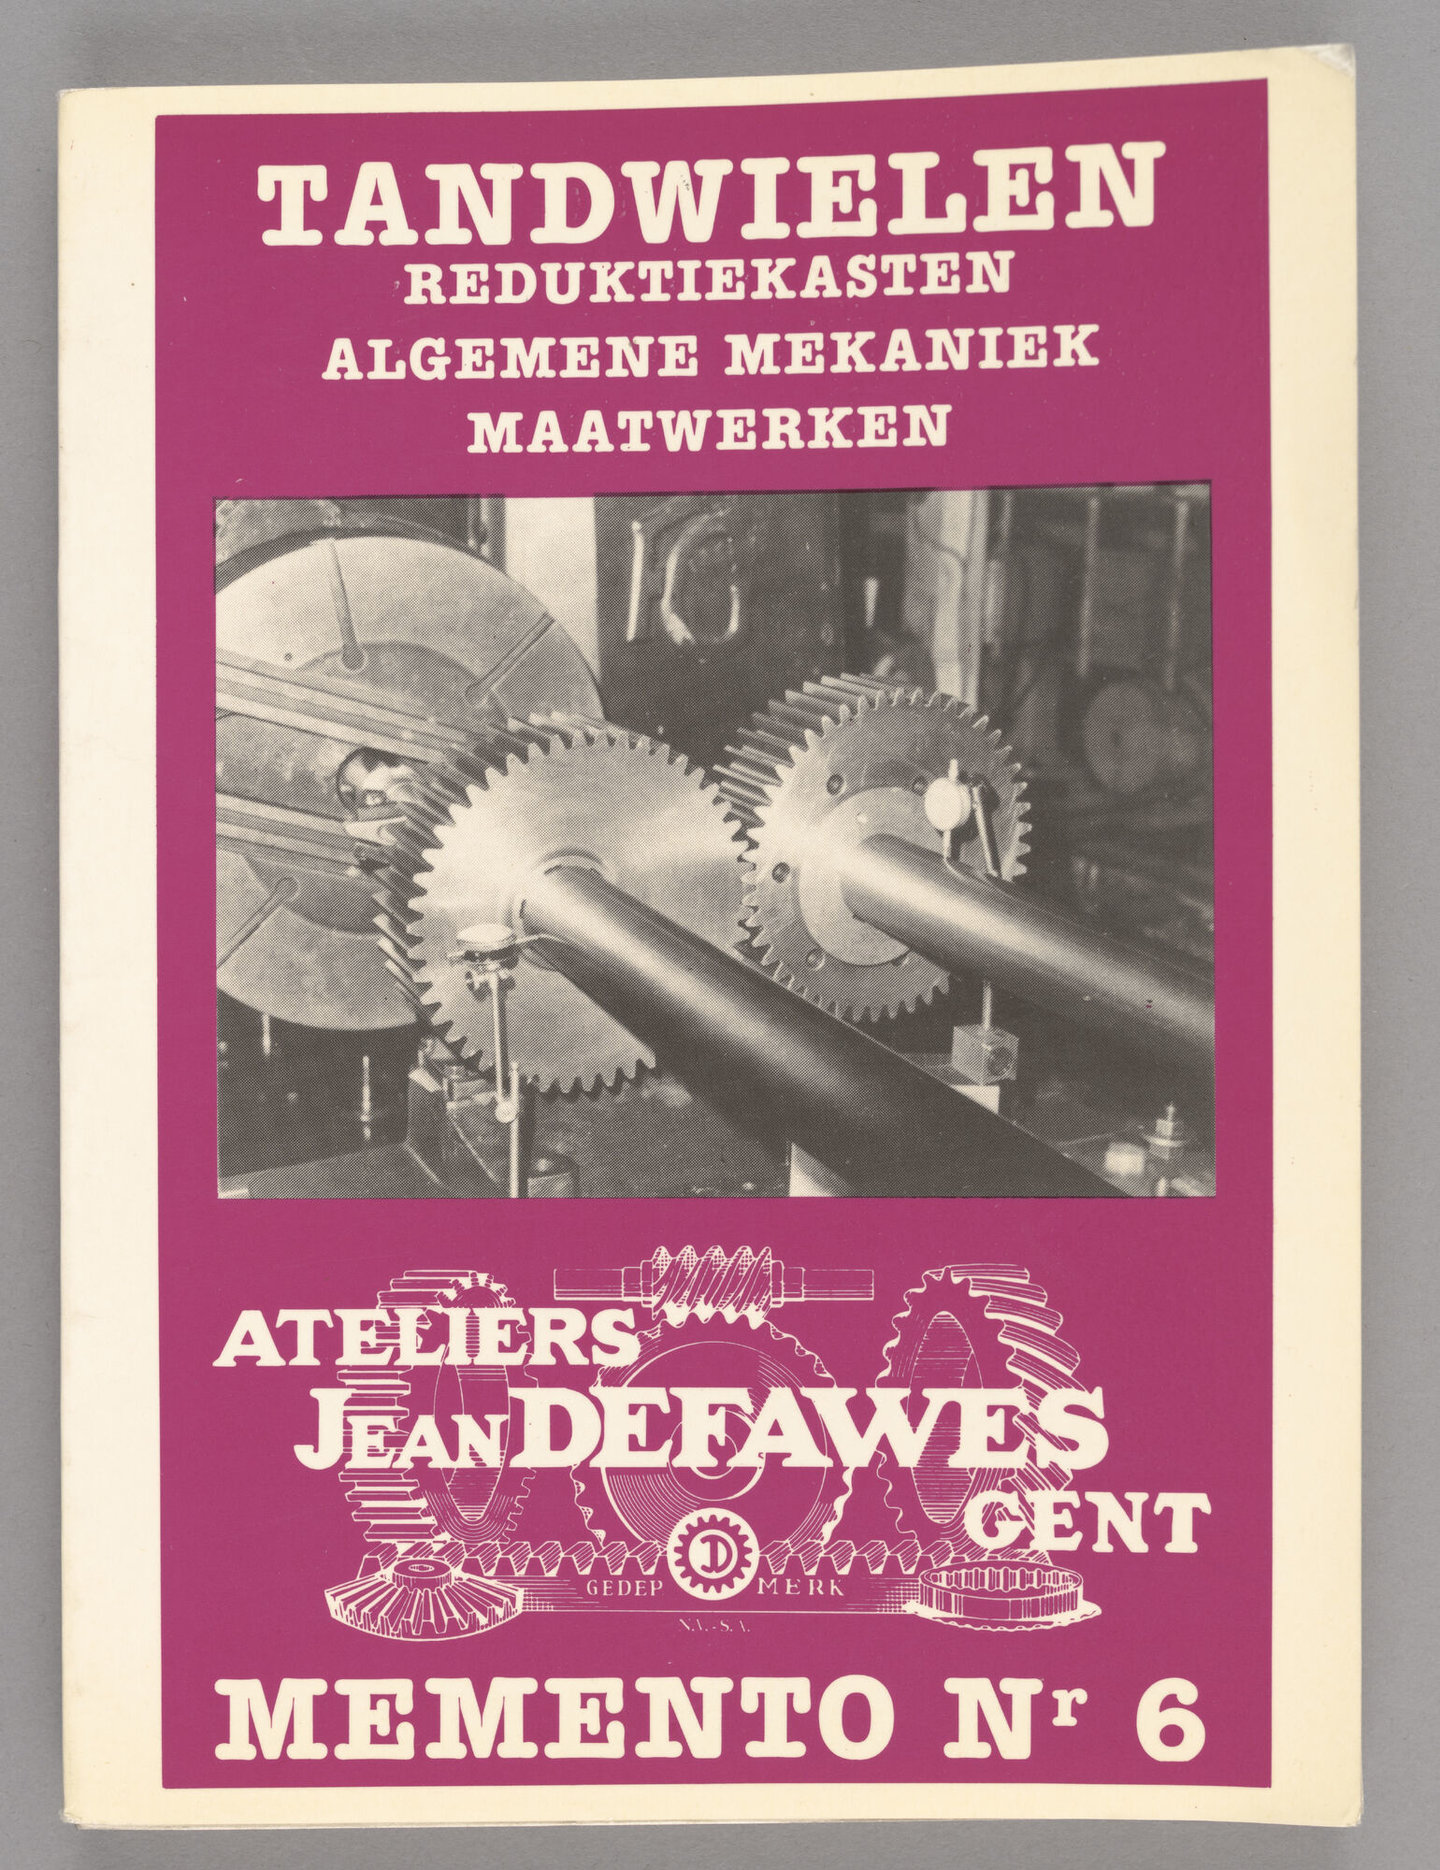 Productcatalogus van tandwielfabrikant Defawes in Wondelgem